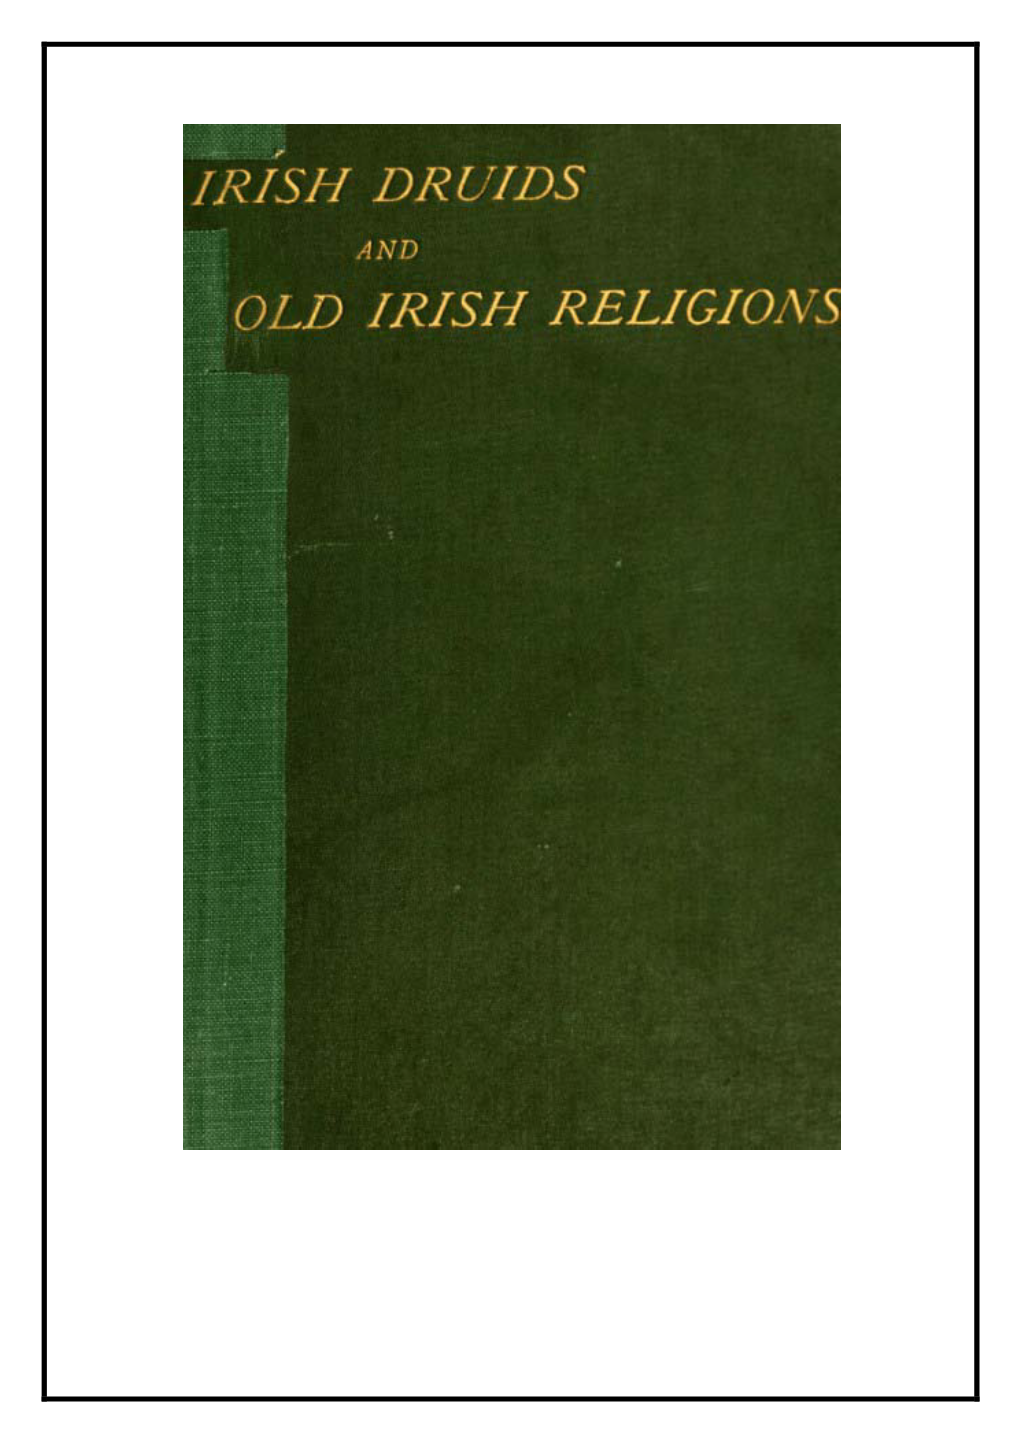 Irish Druids and Old Irish Religions by James Bonwick